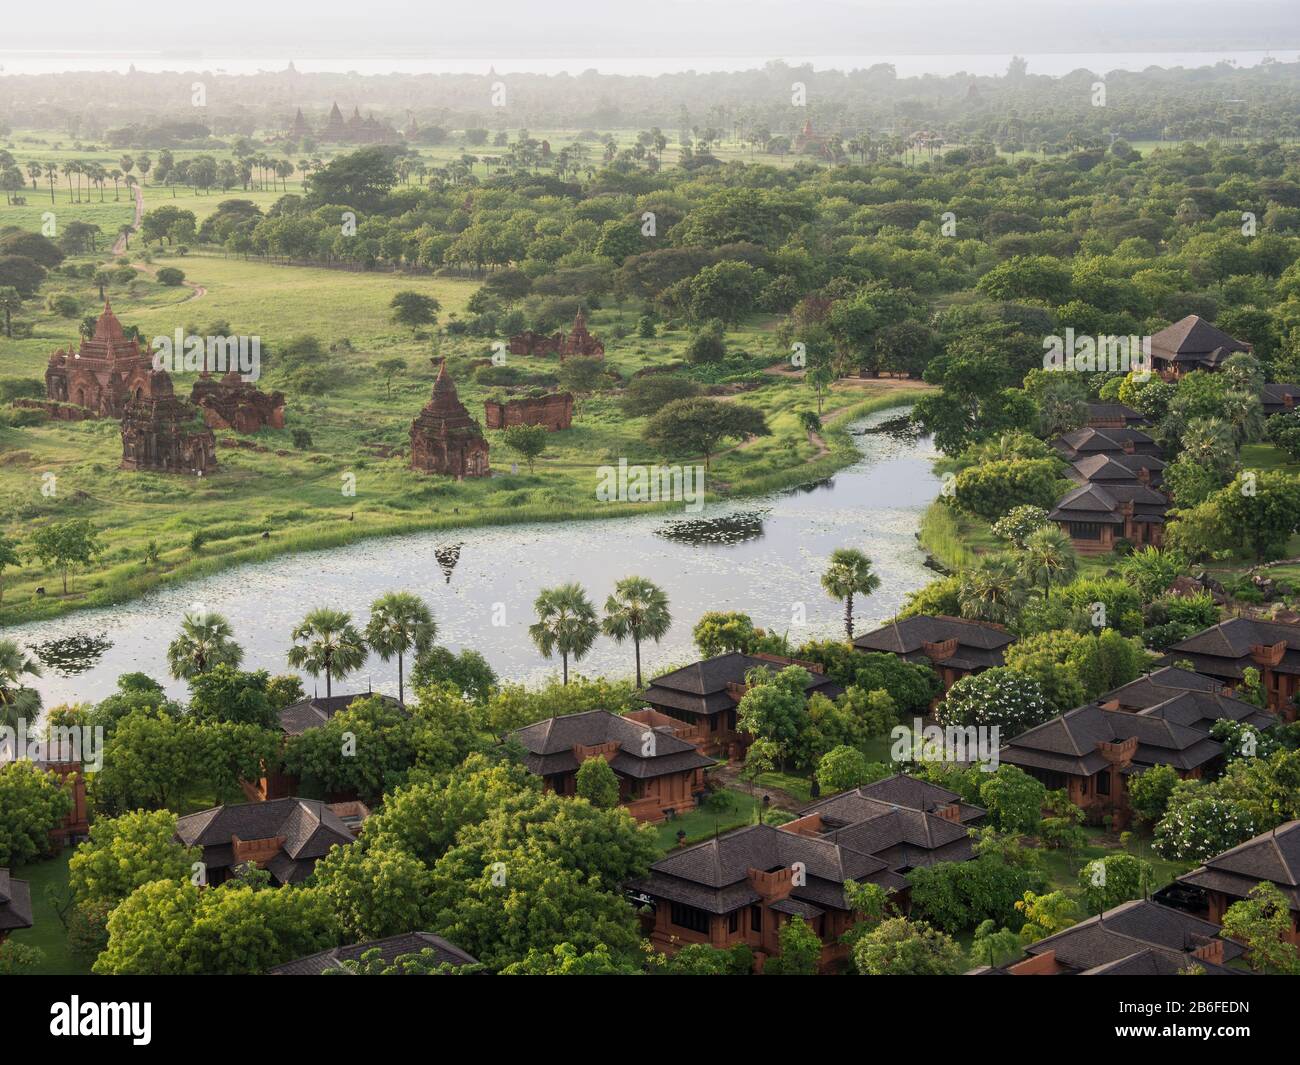 Villas at Aureum Palace Hotel and nearby stupas in the Bagan plain, Mandalay Region, Myanmar Stock Photo